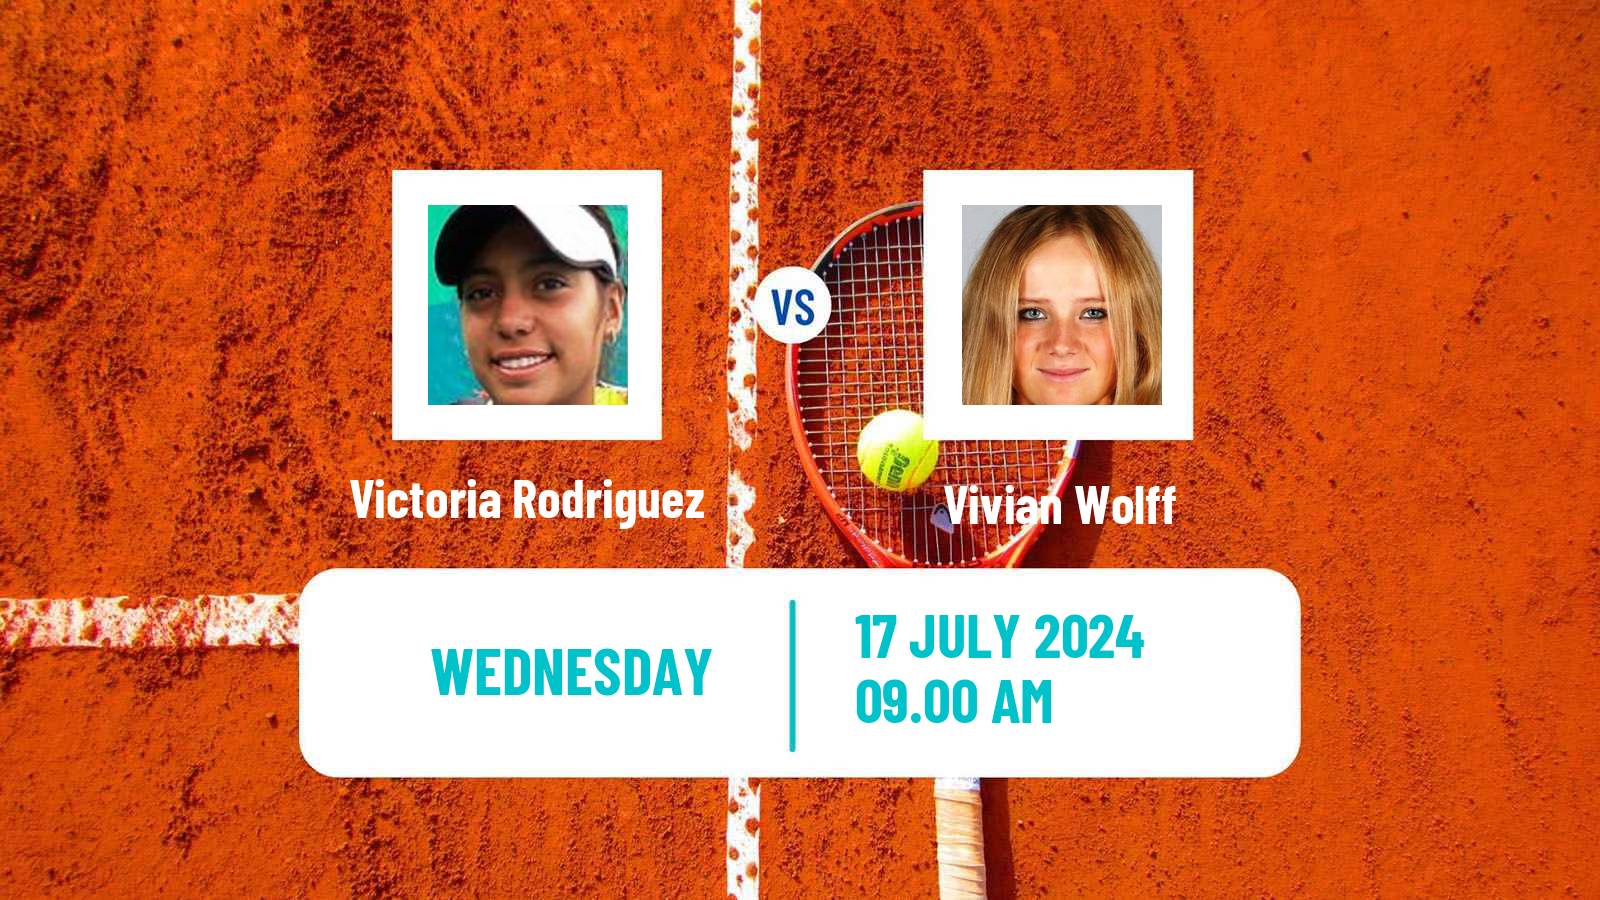 Tennis ITF W35 Darmstadt Women Victoria Rodriguez - Vivian Wolff